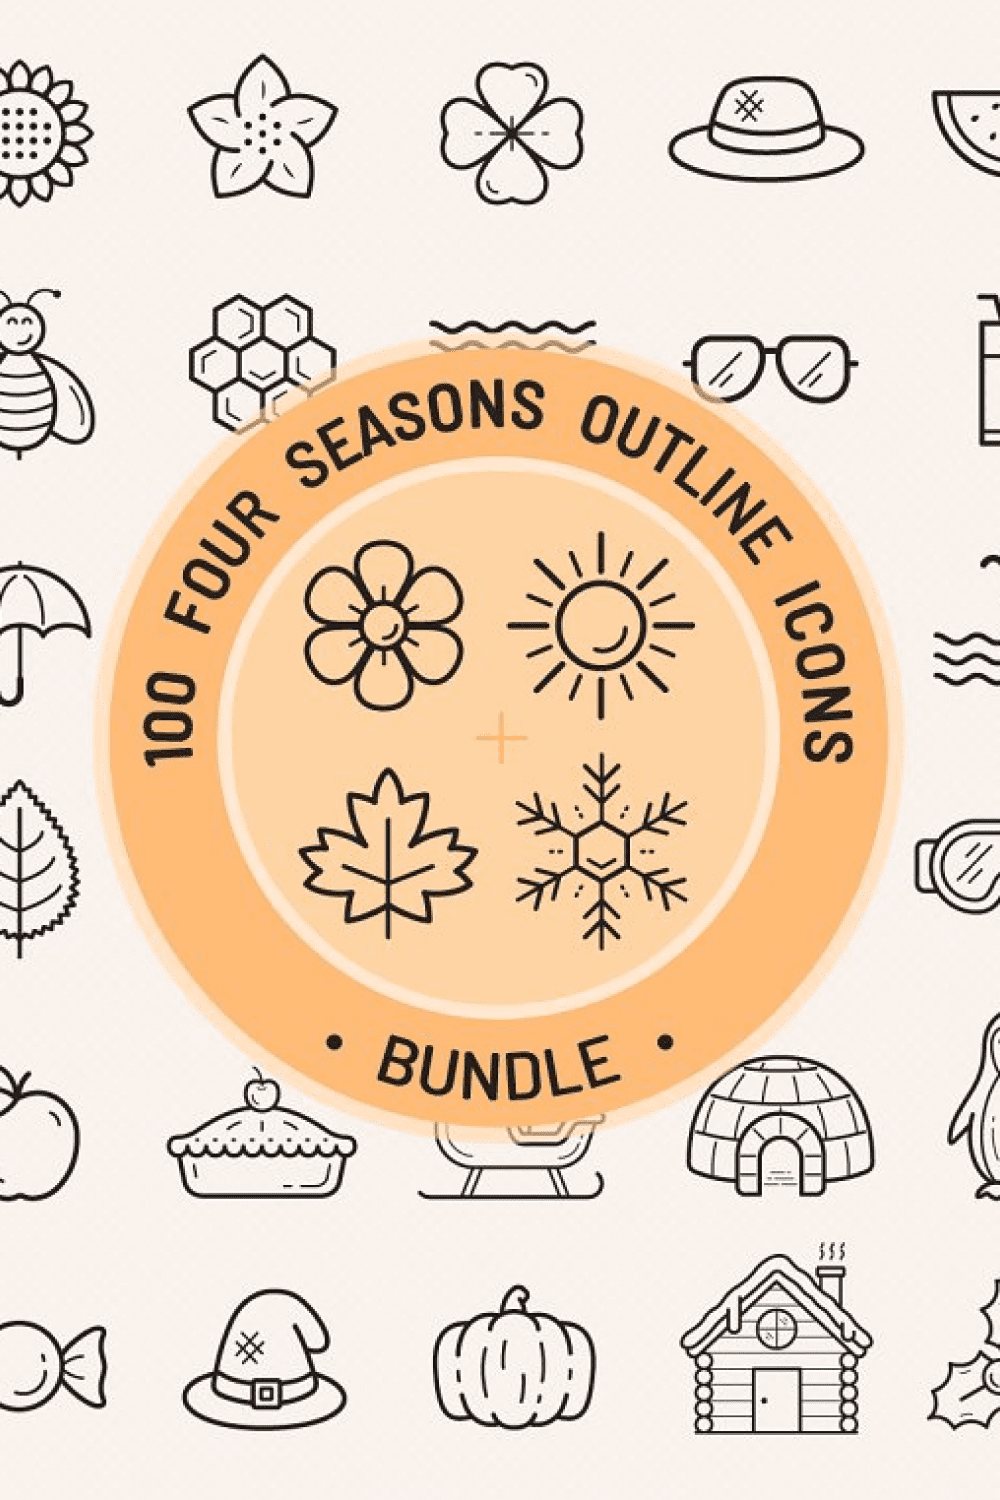 Four seasons outline icons bundle - pinterest image preview.